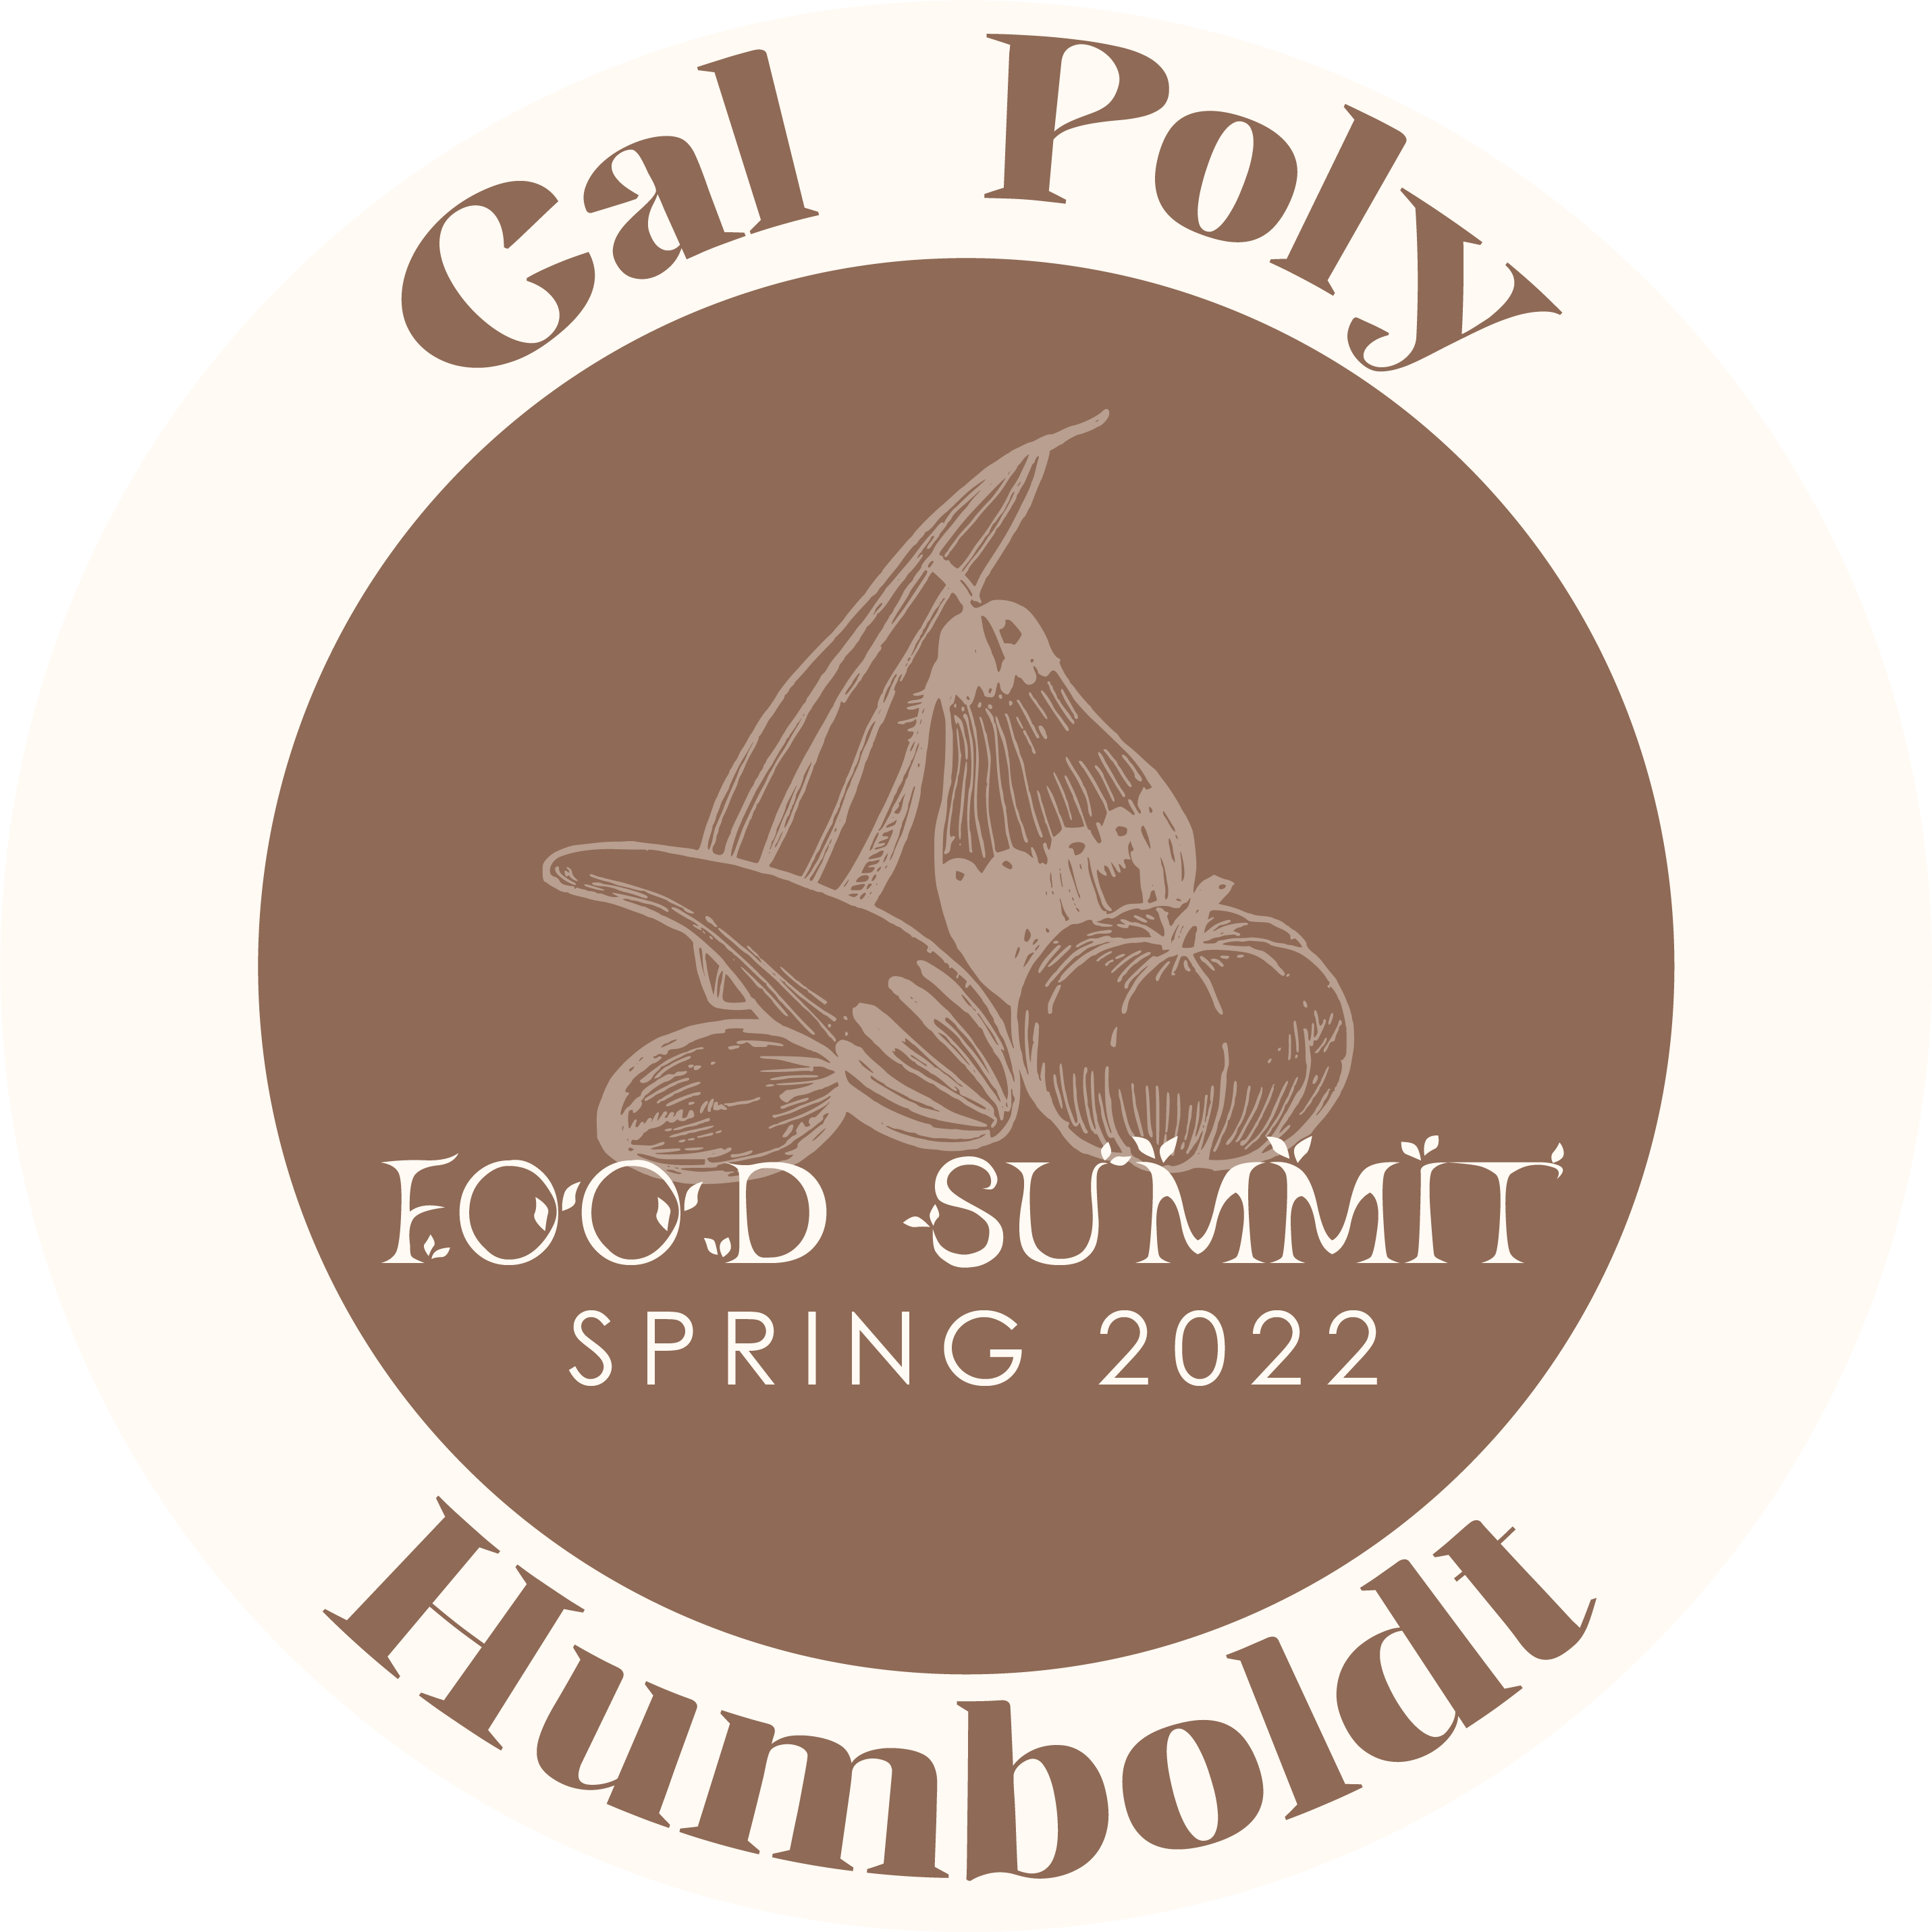 "Cal Poly Humboldt Food Summit Spring 2022" logo.